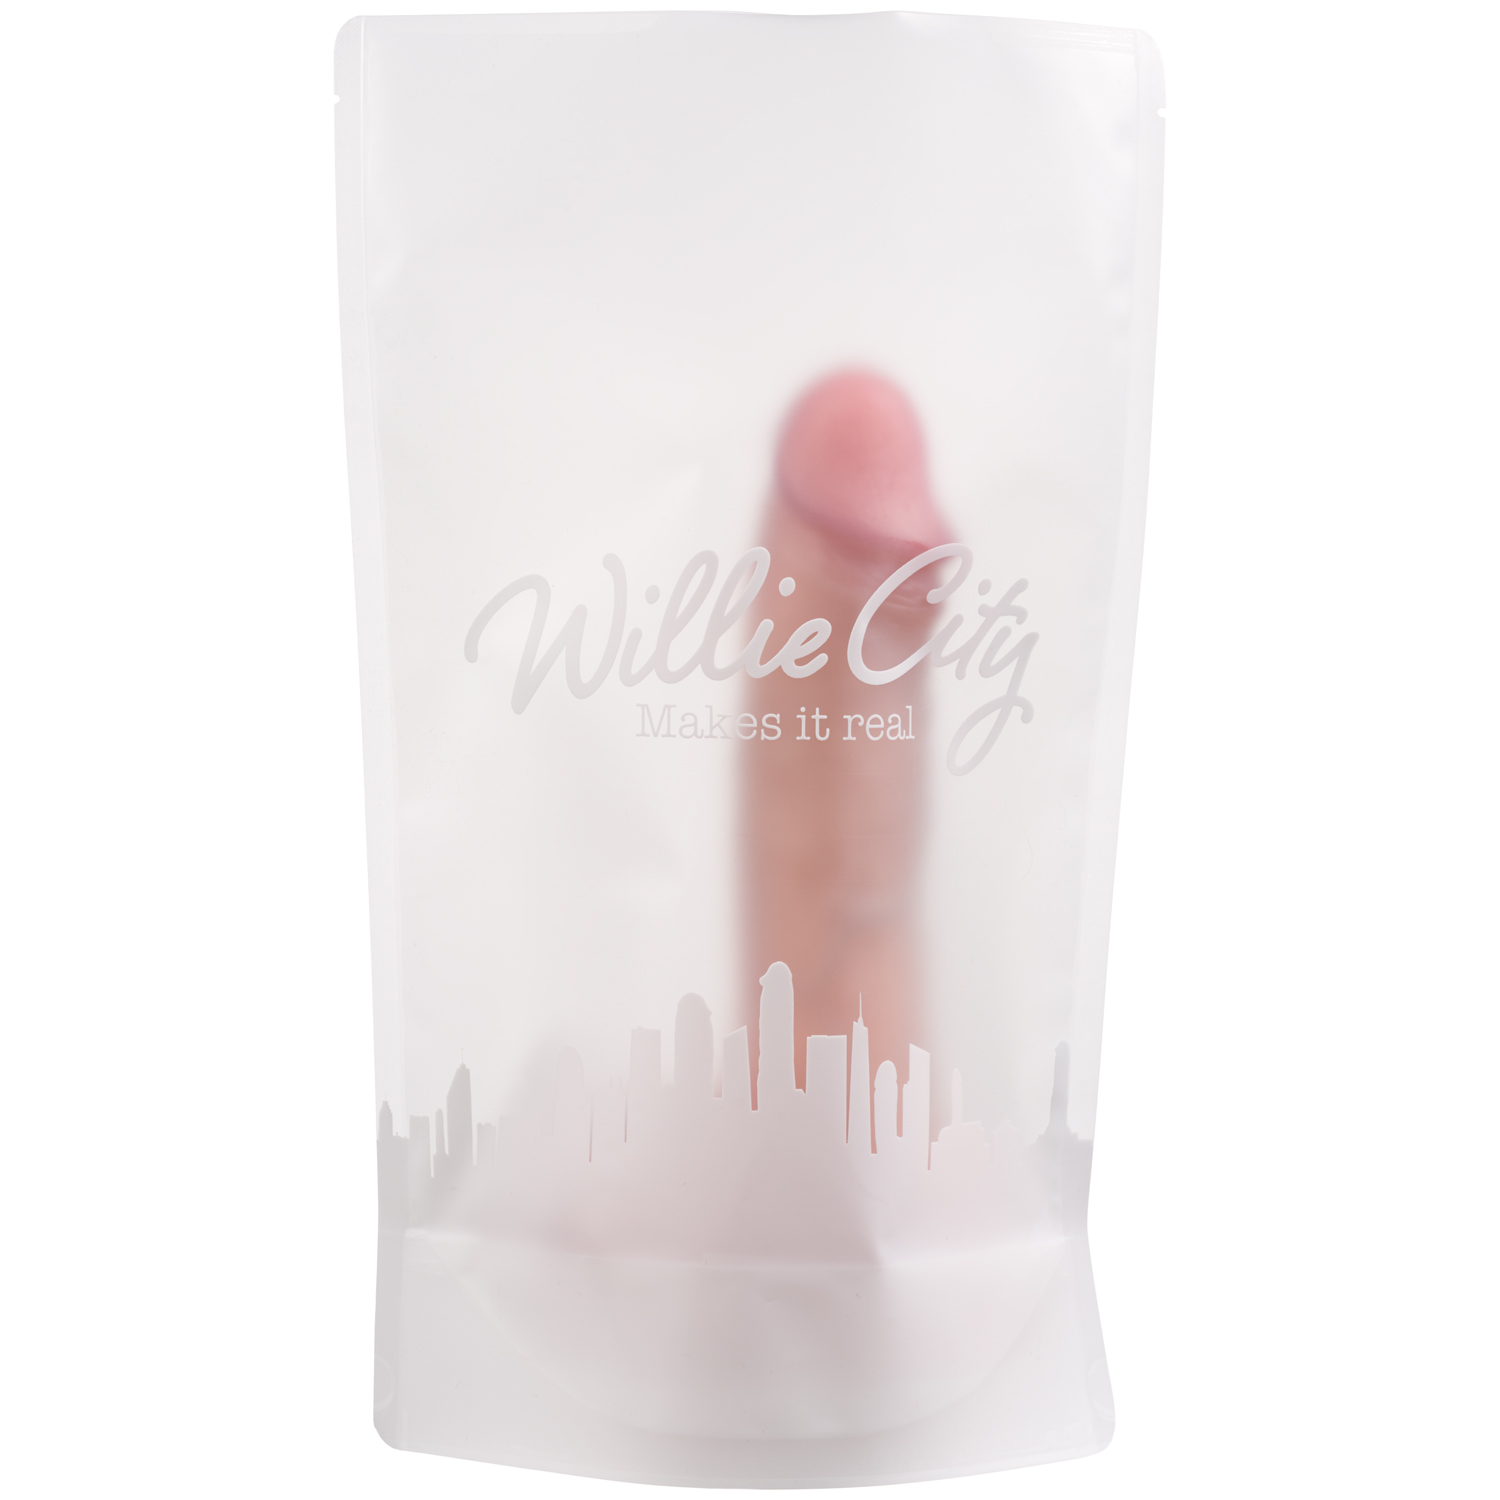 Willie City Willie City Super Realistic Silikondildo 22 cm - Beige